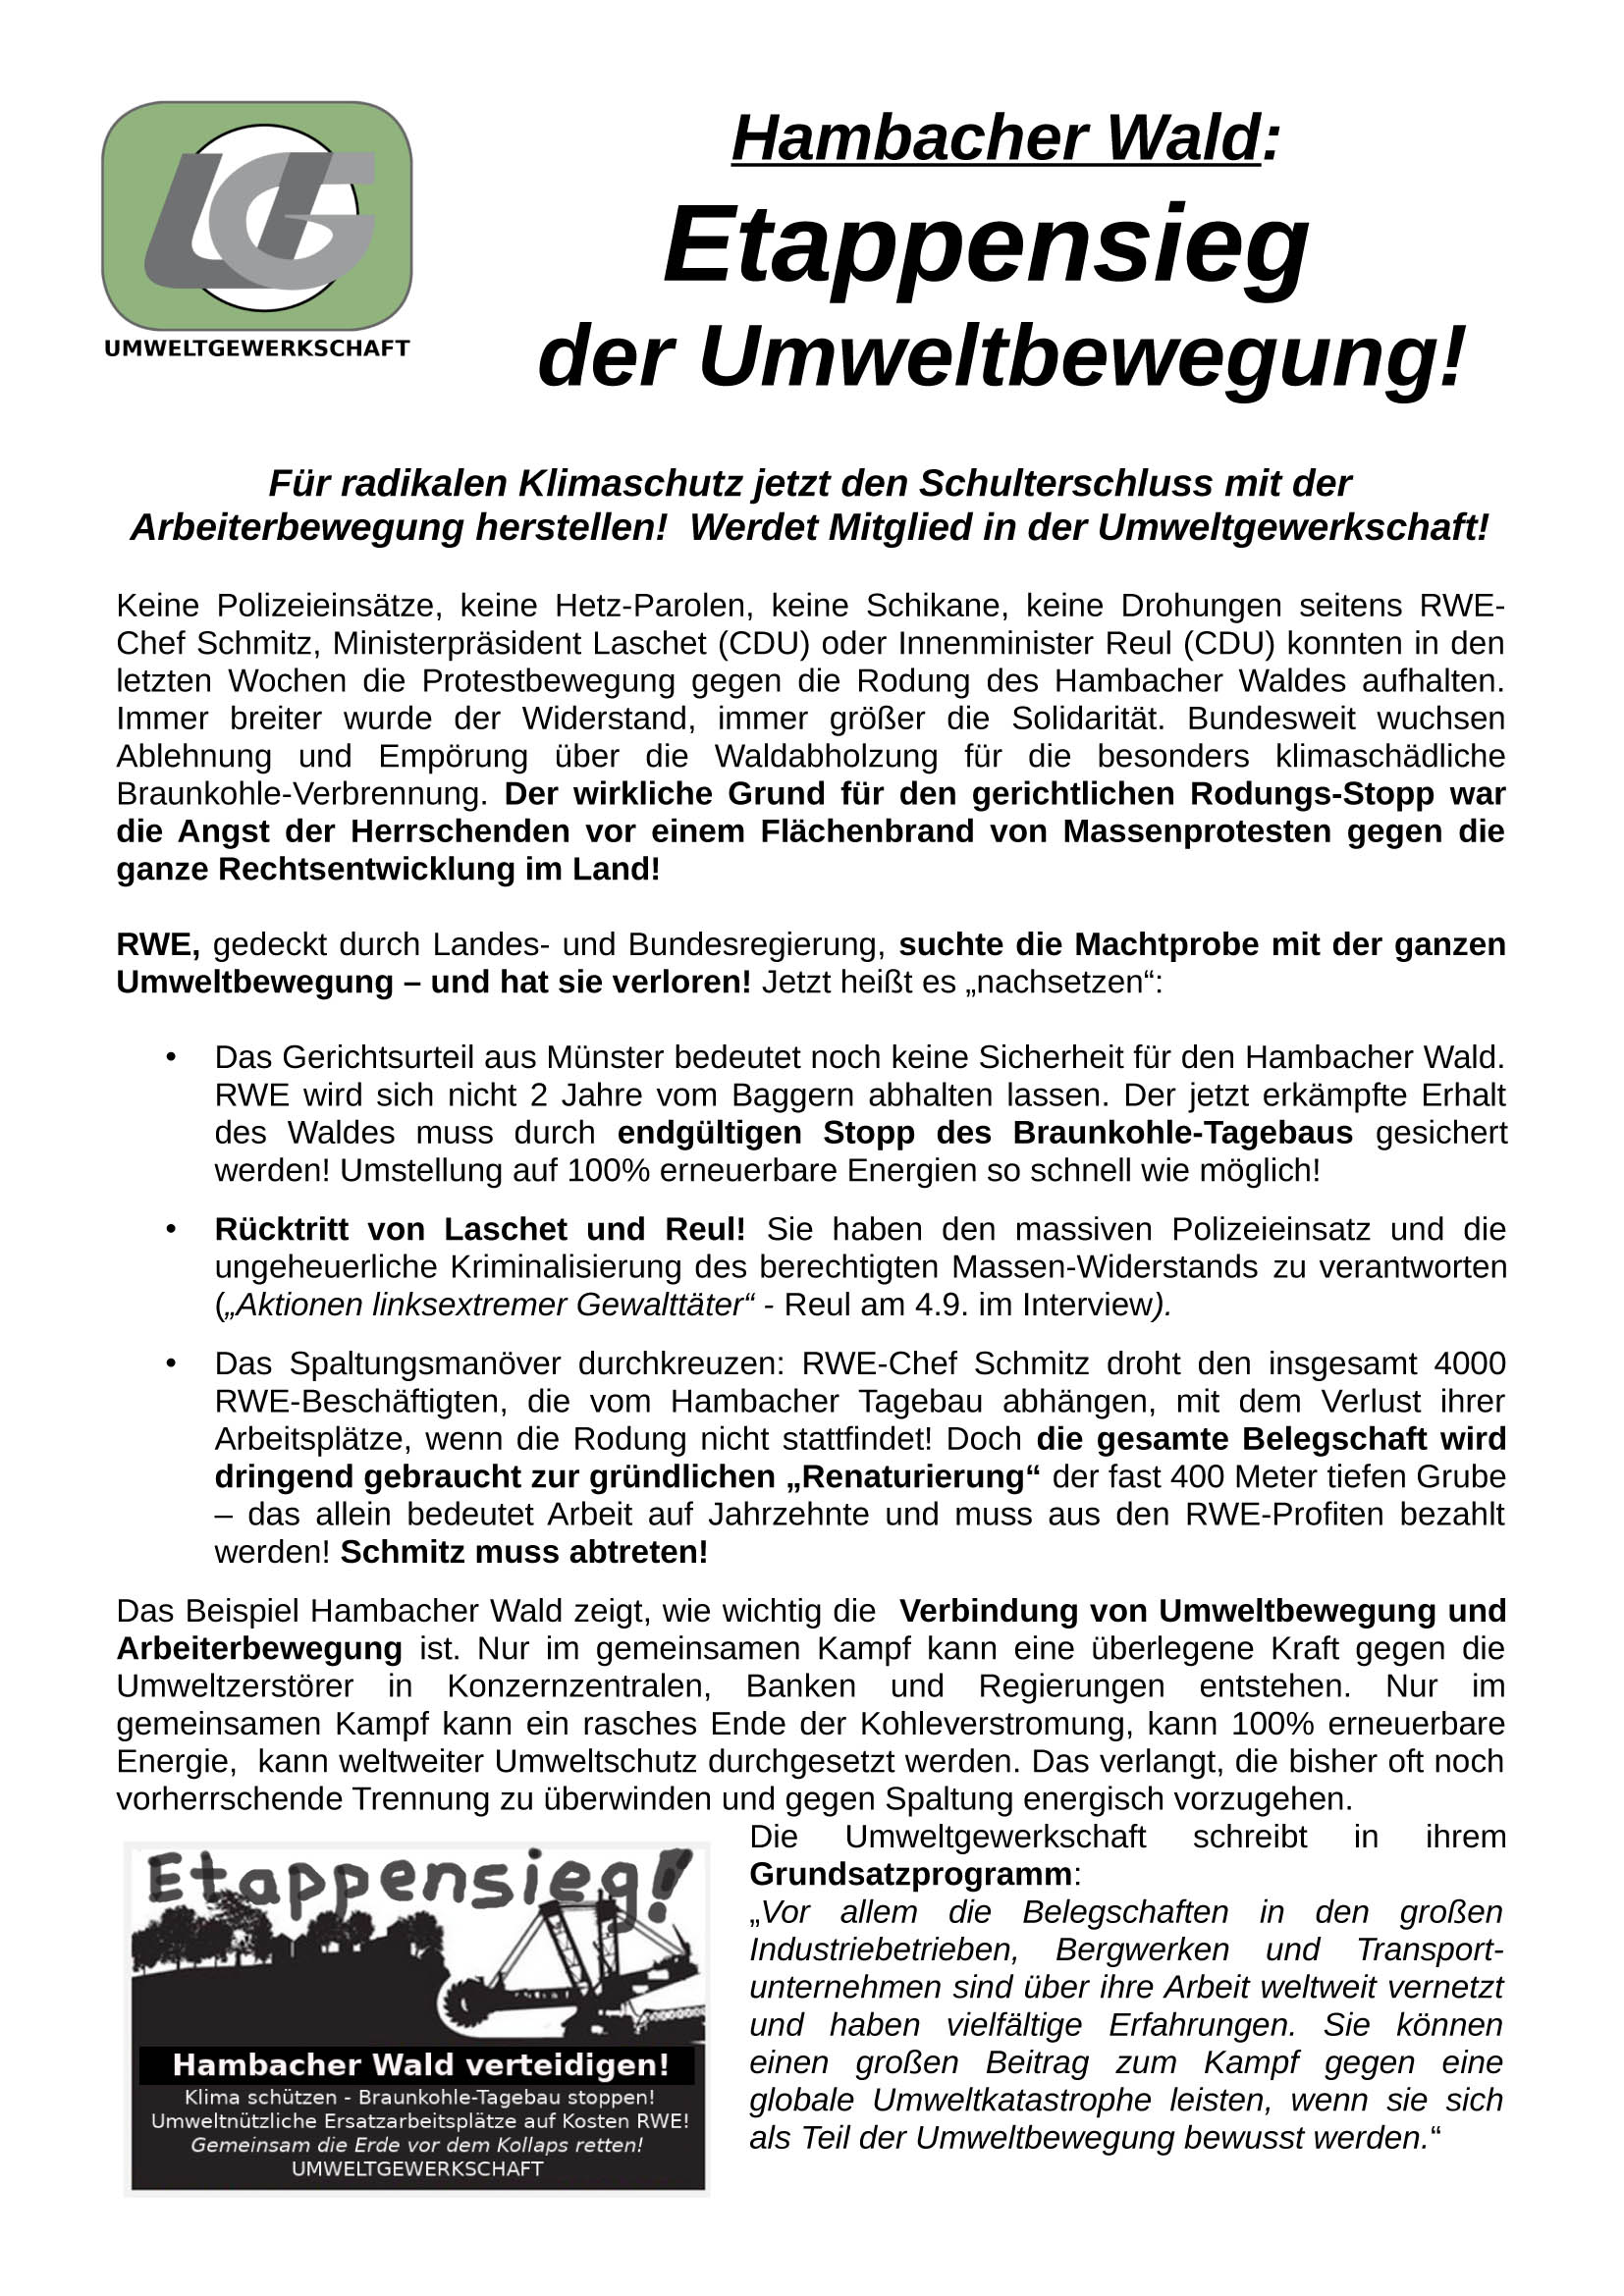 UG Flugblatt Hambacher Wald Deckblatt